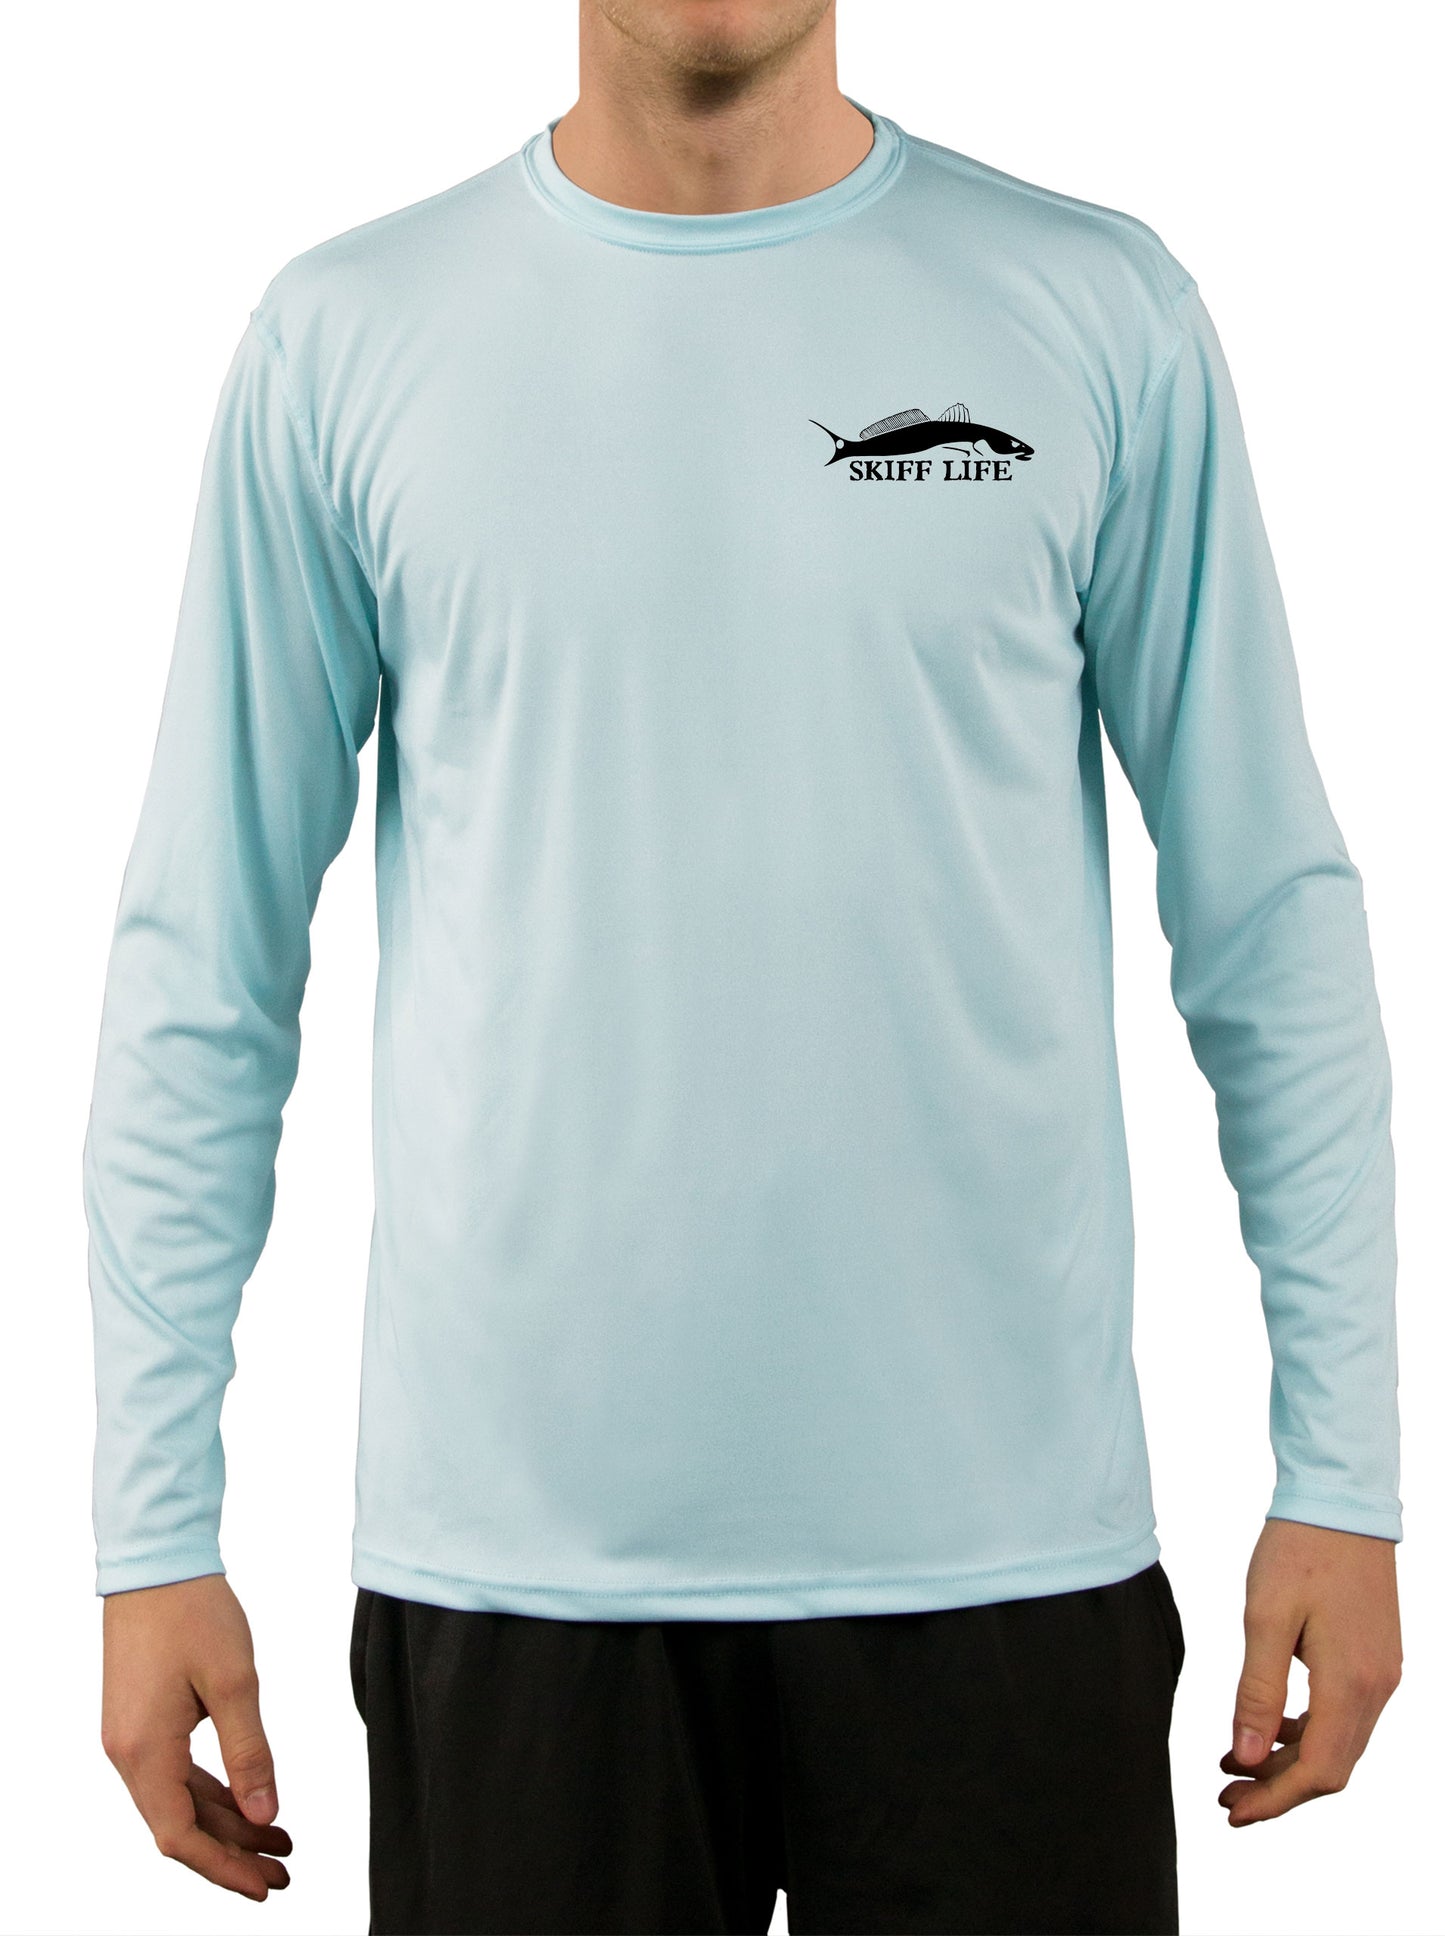 Fishing Shirts Men's Quick Dry Lightweight UPF 50+ Long Sleeve Shirts Rash Guard Swim Shirts Hiking Shirts Moisture Wicking Medium / Ice Blue